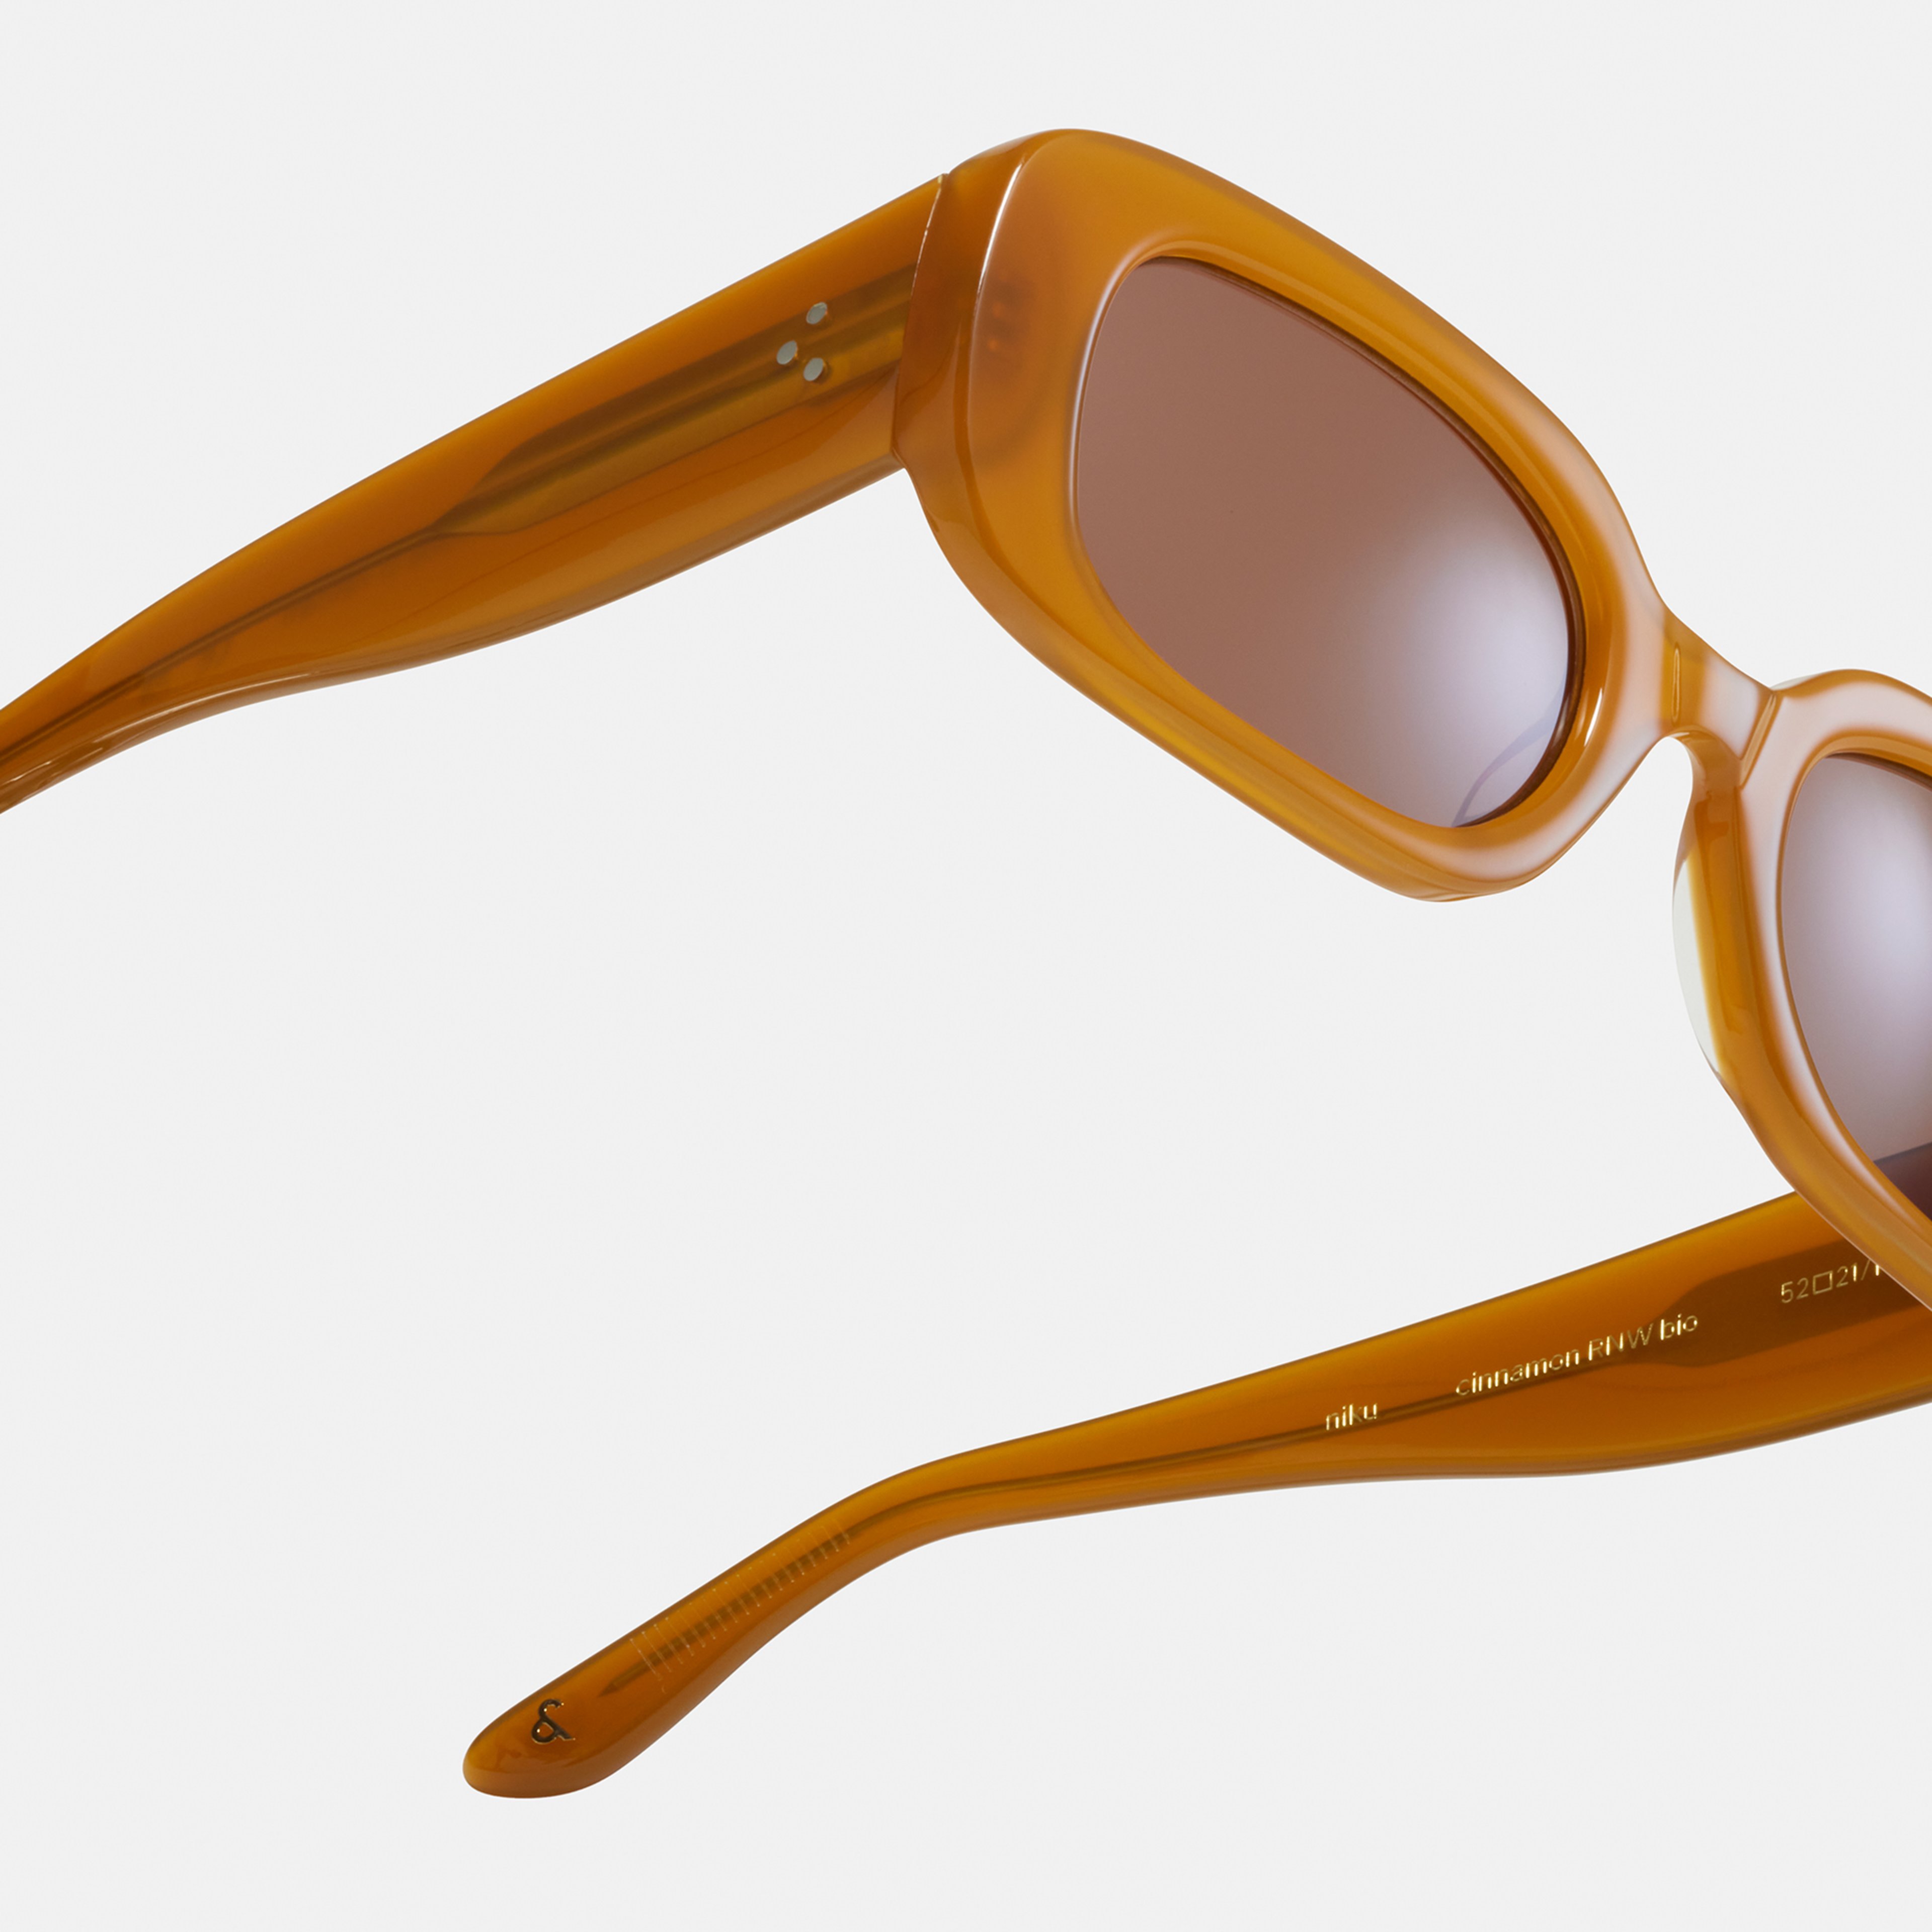 Ace & Tate Sunglasses | rectangle Renew bio acetate in Brown